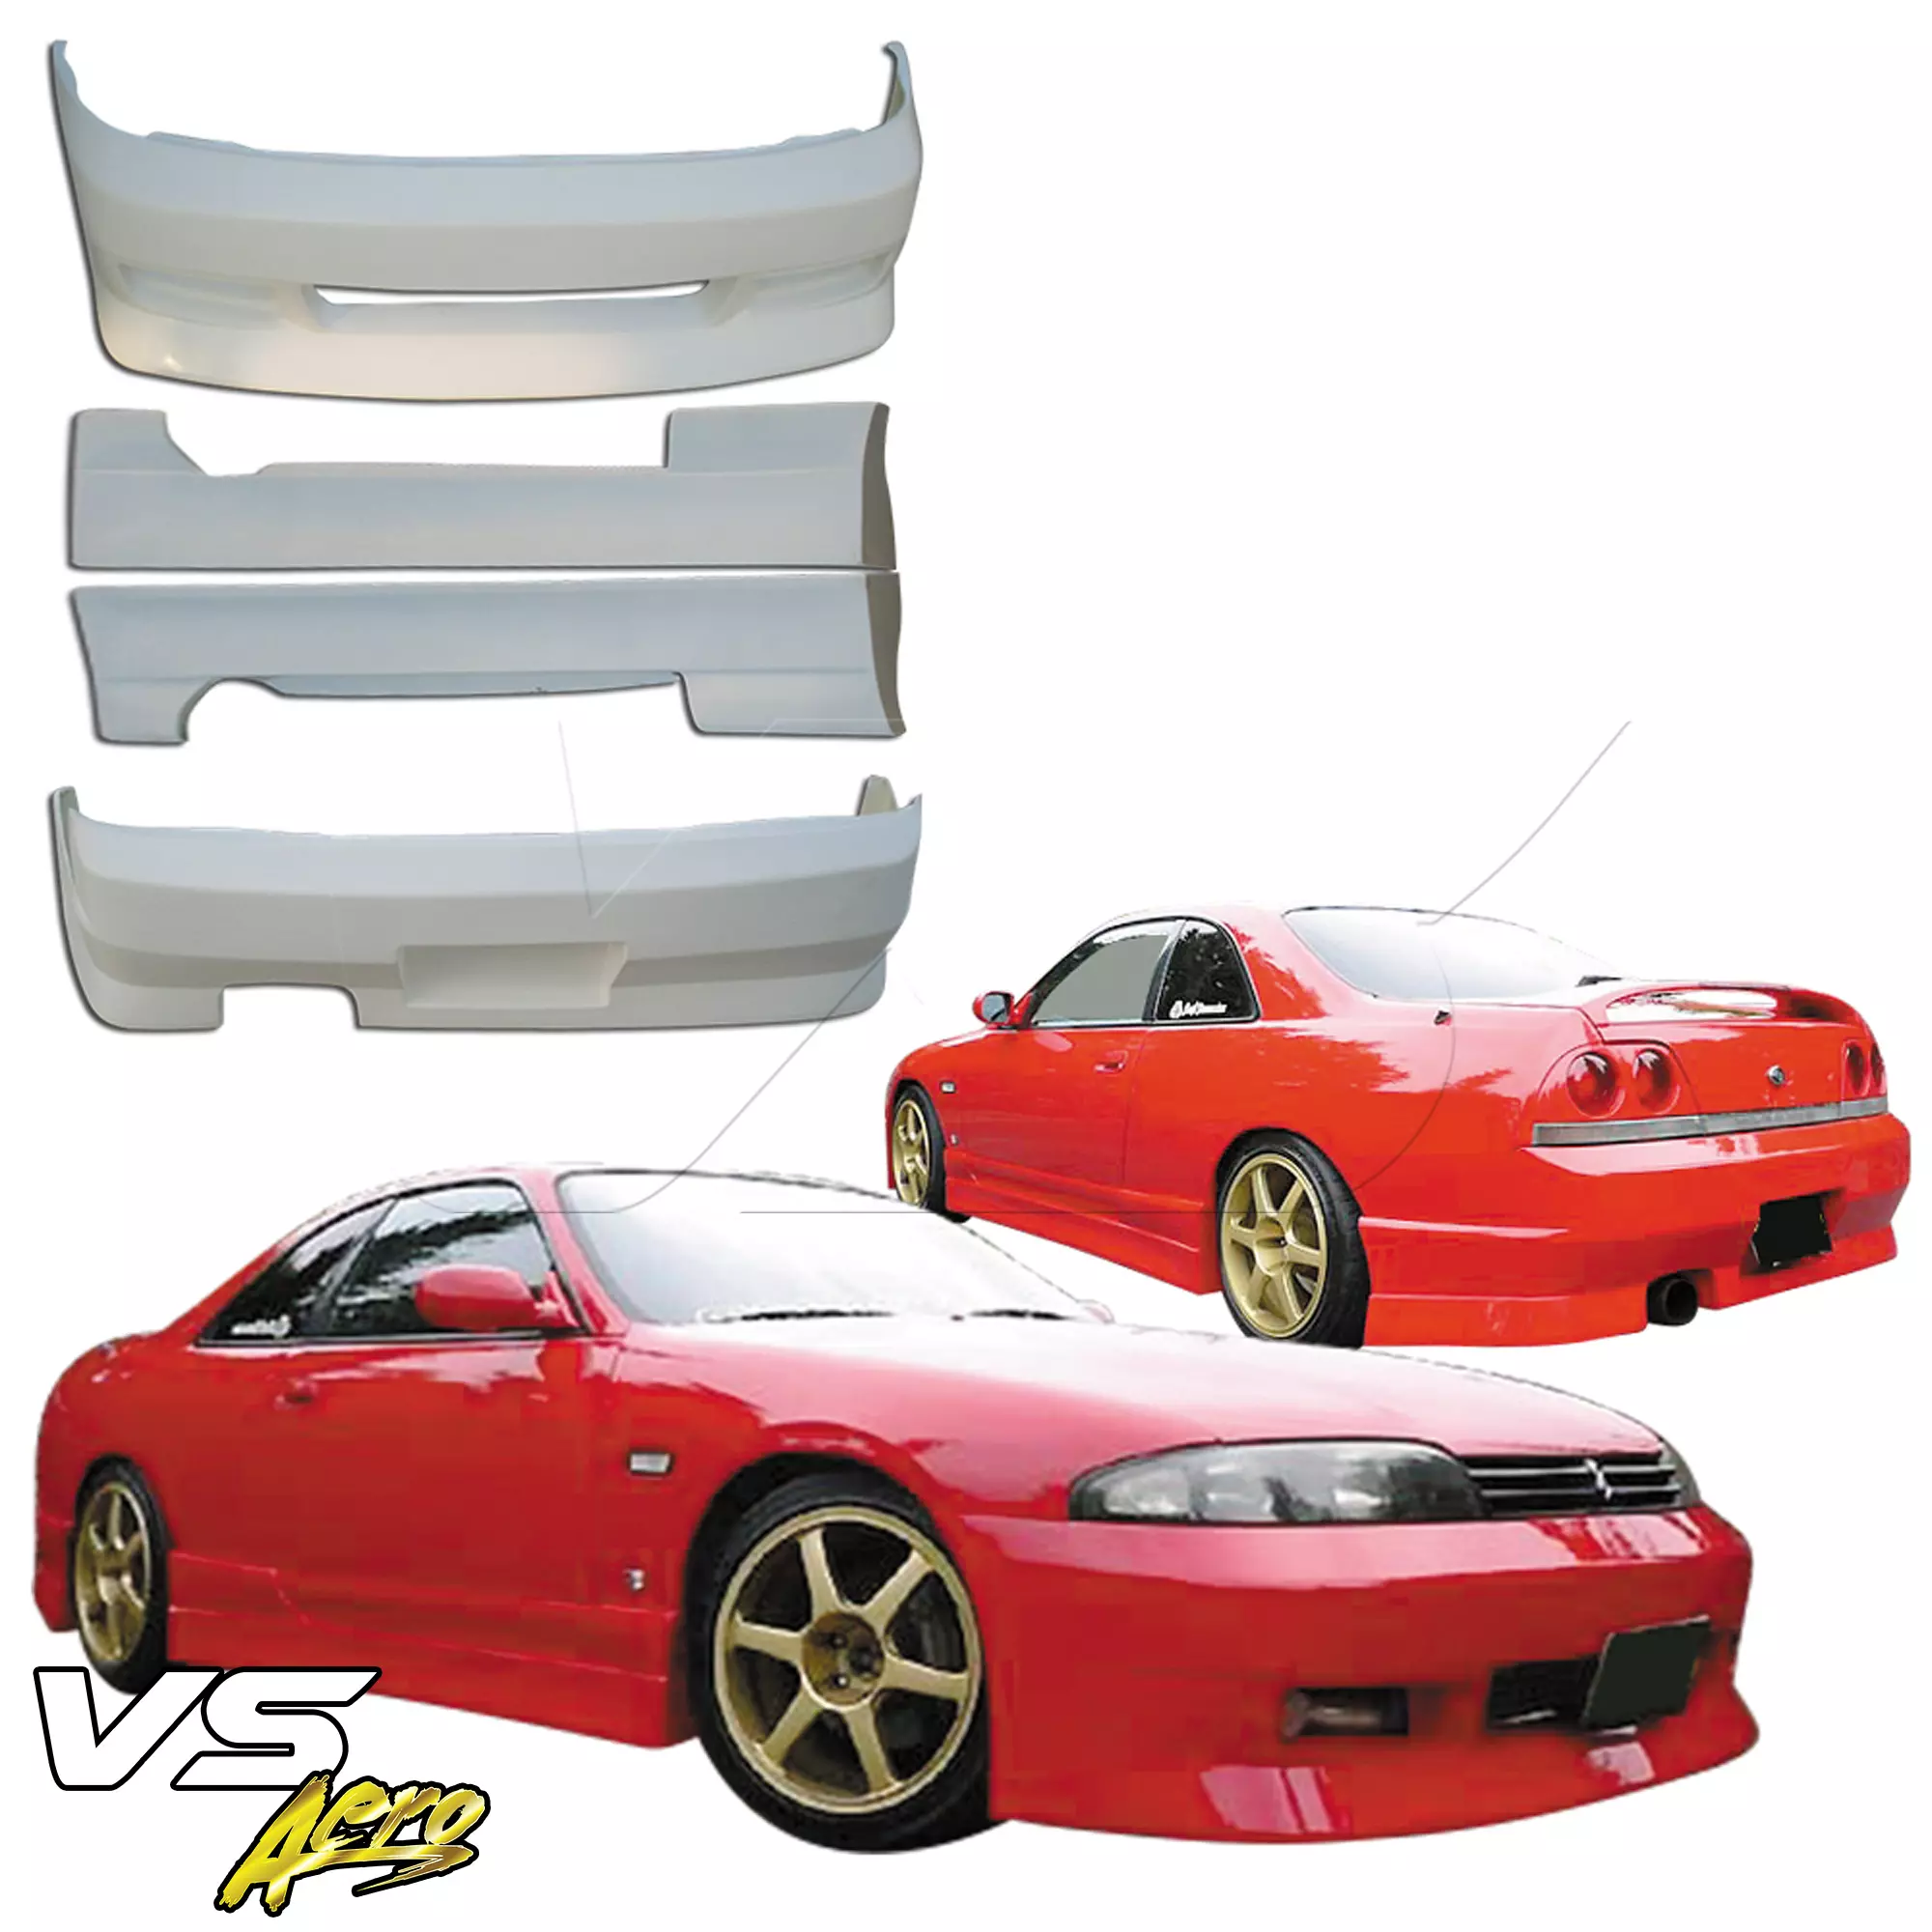 VSaero FRP FKON Body Kit 4pc > Nissan Skyline R33 GTS 1995-1998 > 2dr Coupe - Image 1